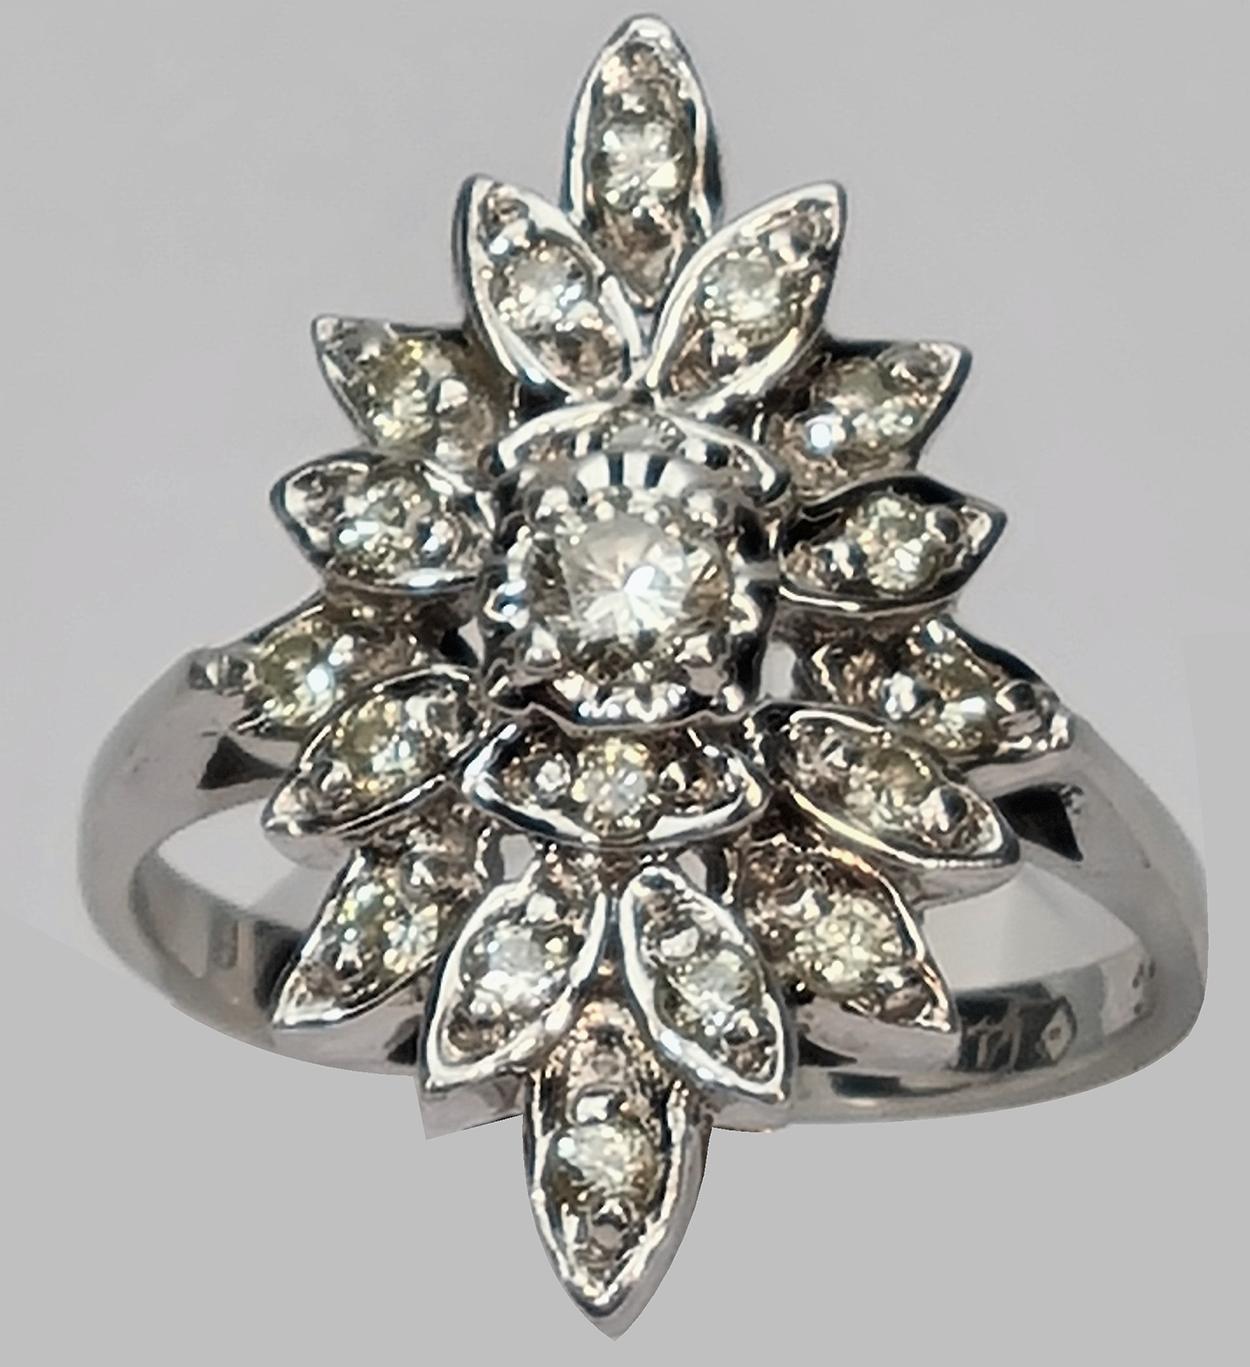 Extraordinary Art Deco Diamond Ring, 585 White Gold In Good Condition For Sale In rijssen, NL